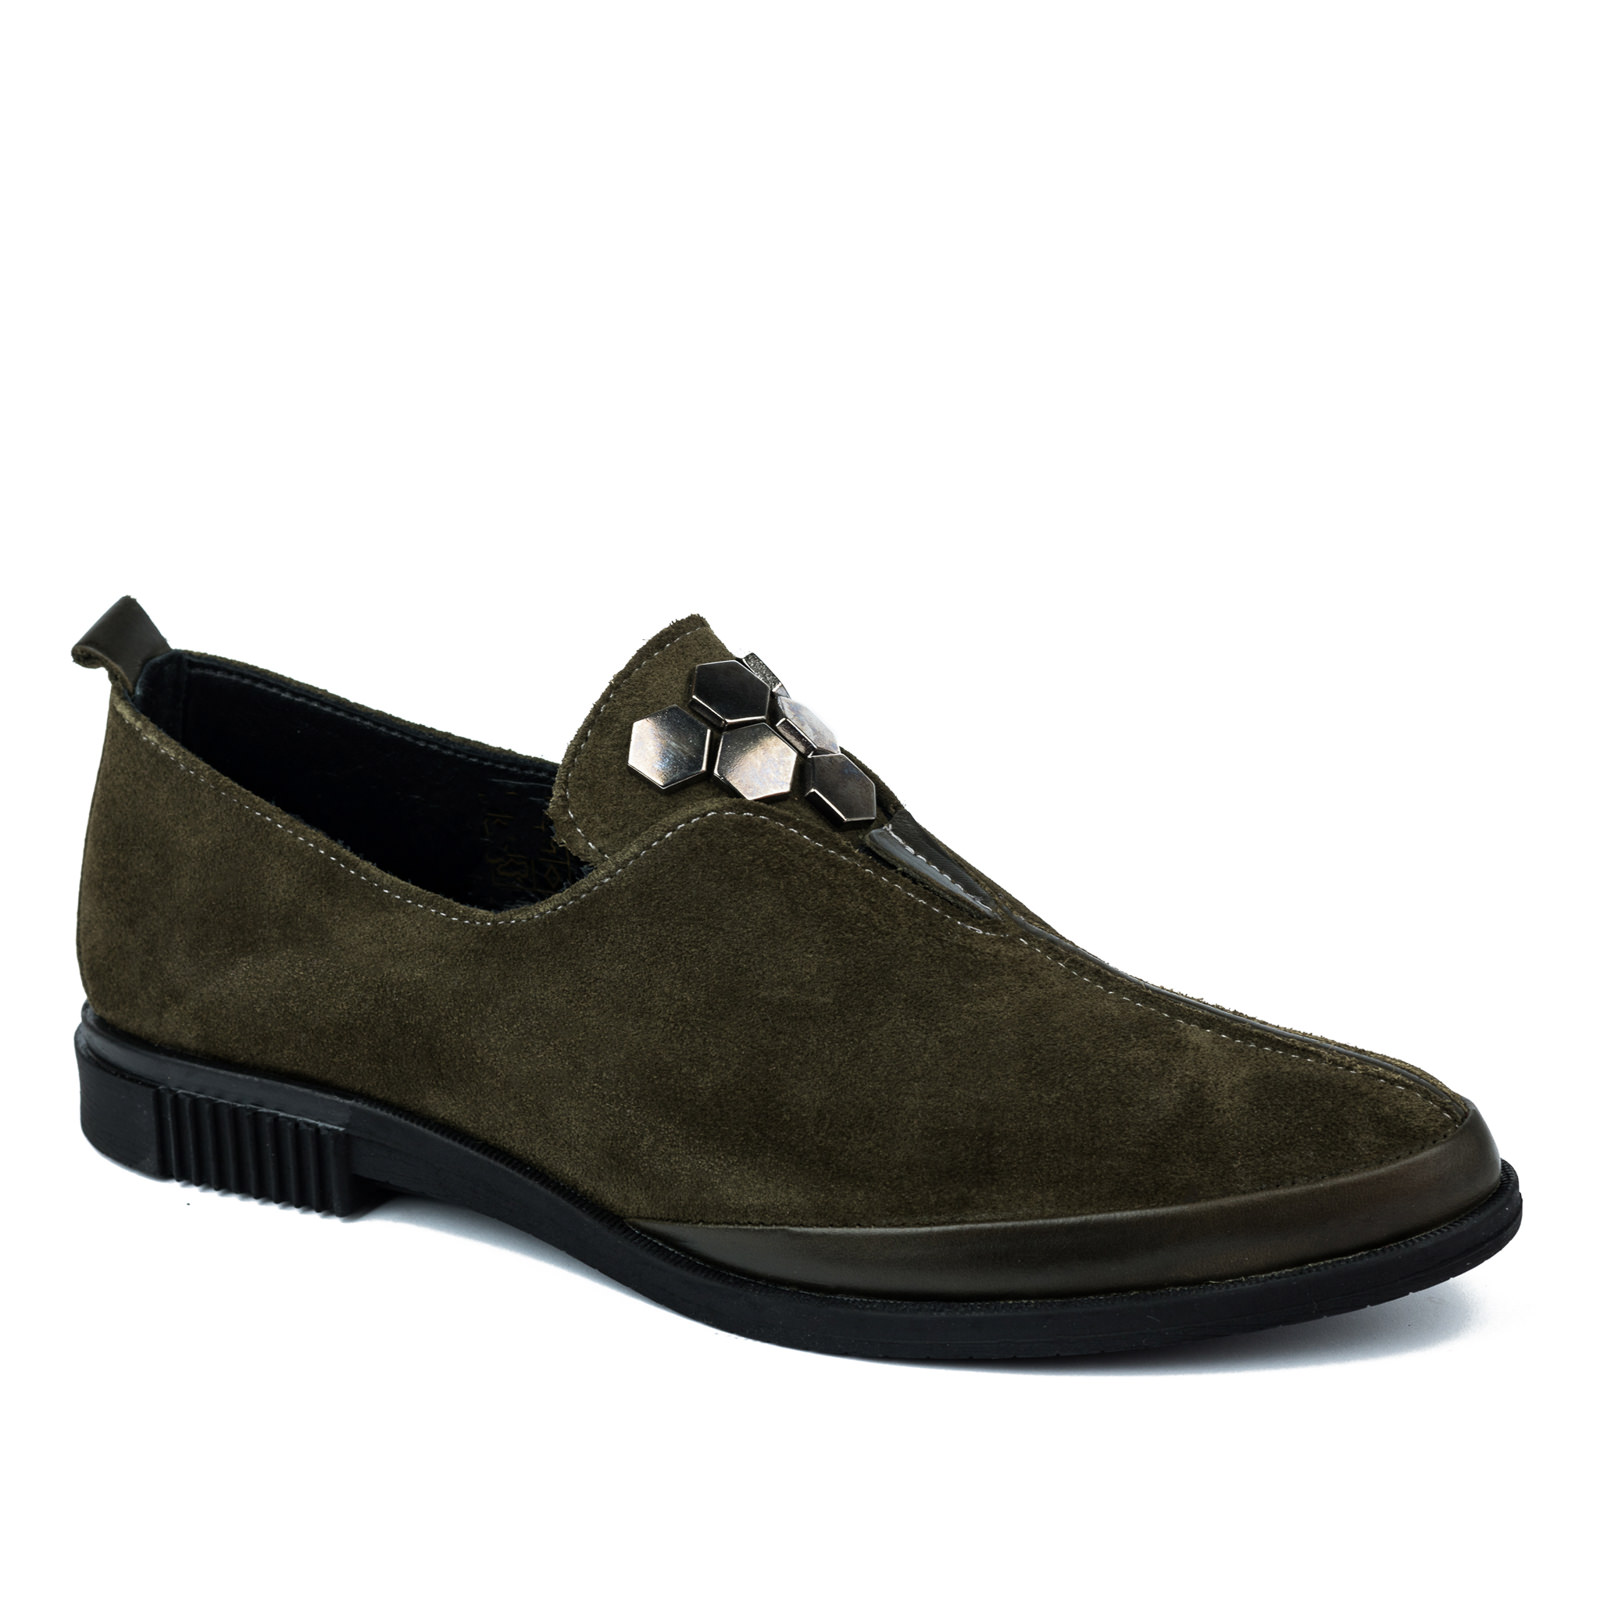 Leather shoes & flats B015 - DARK GREEN